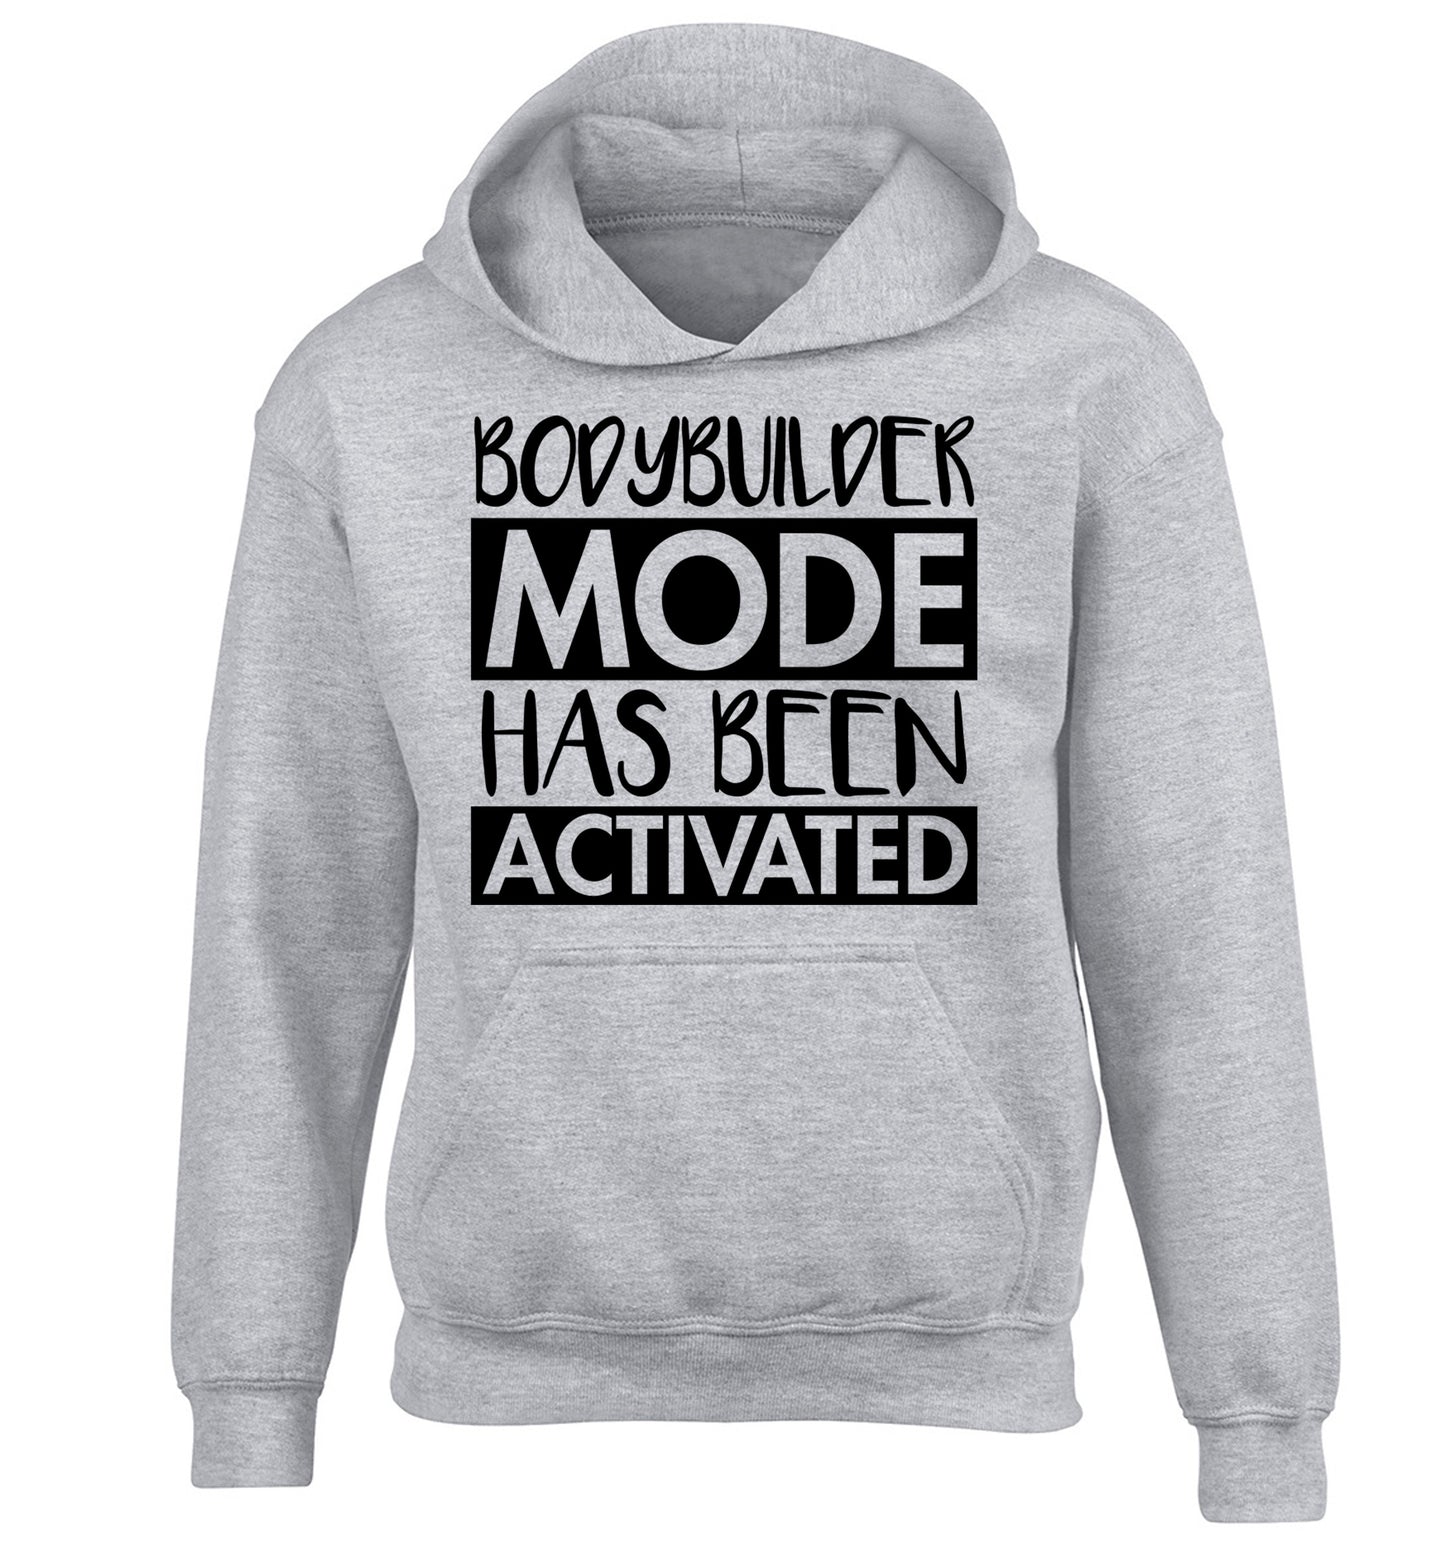 Bodybuilder mode activated children's grey hoodie 12-14 Years